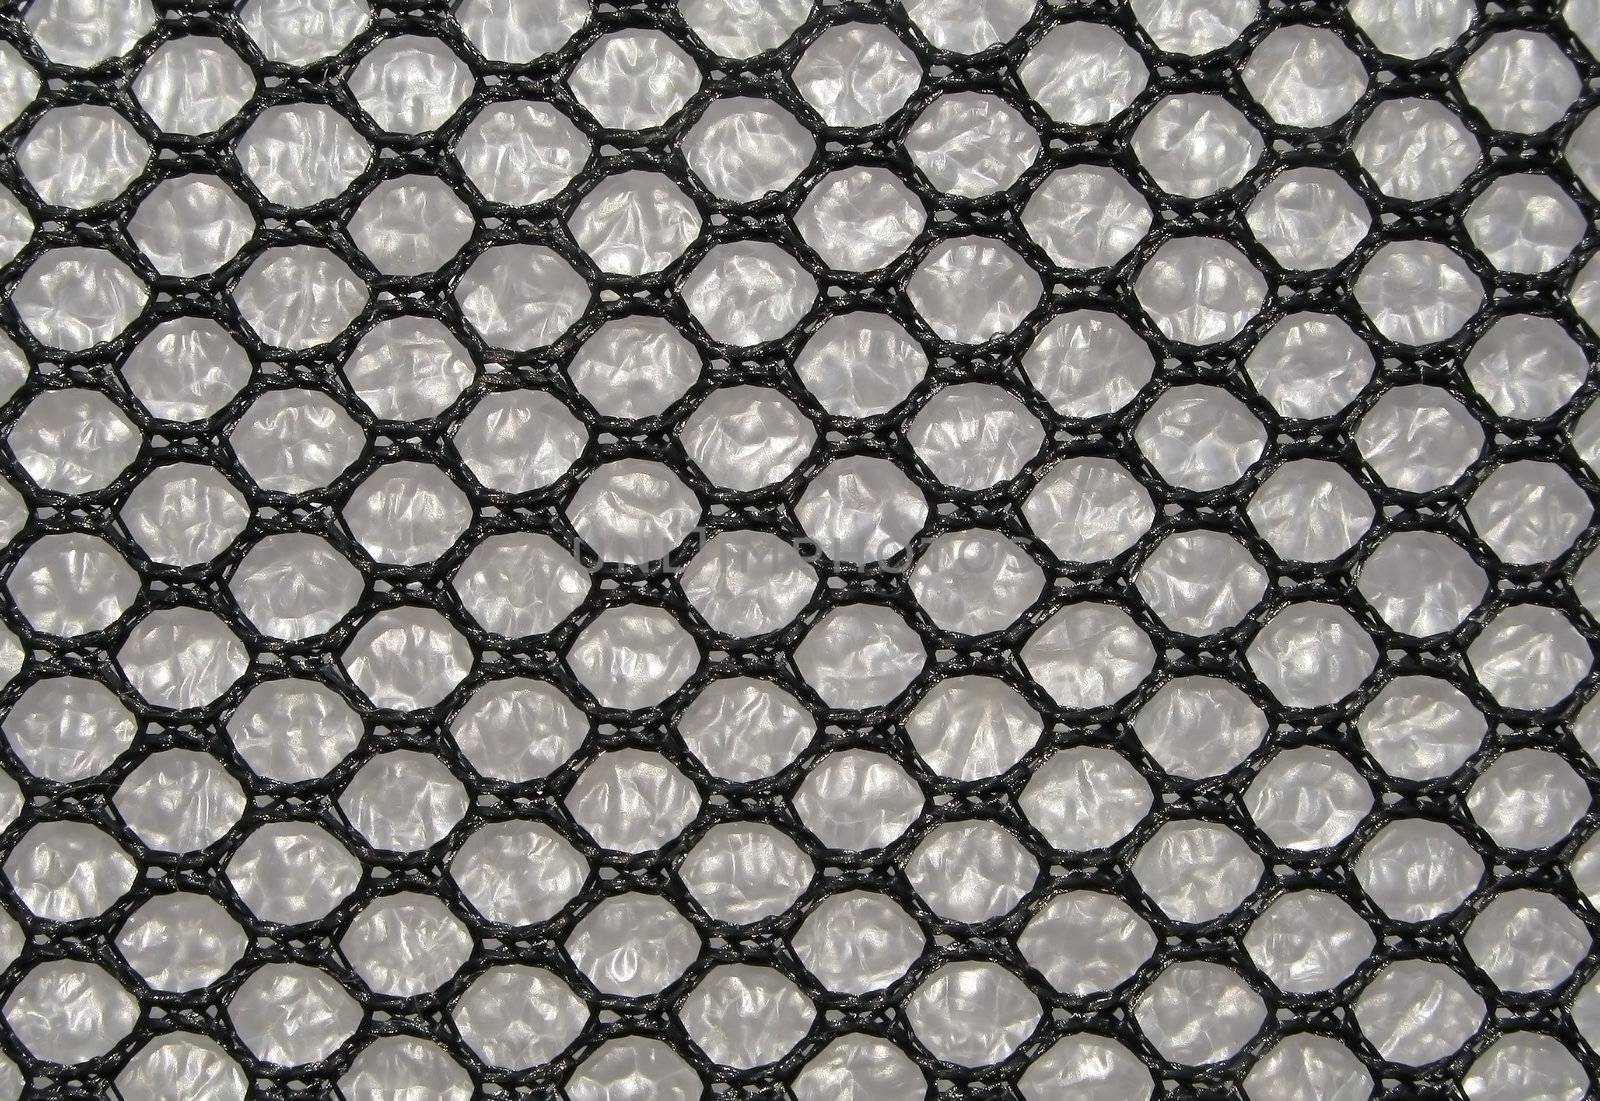 A macro shot of a nanotechnology textile